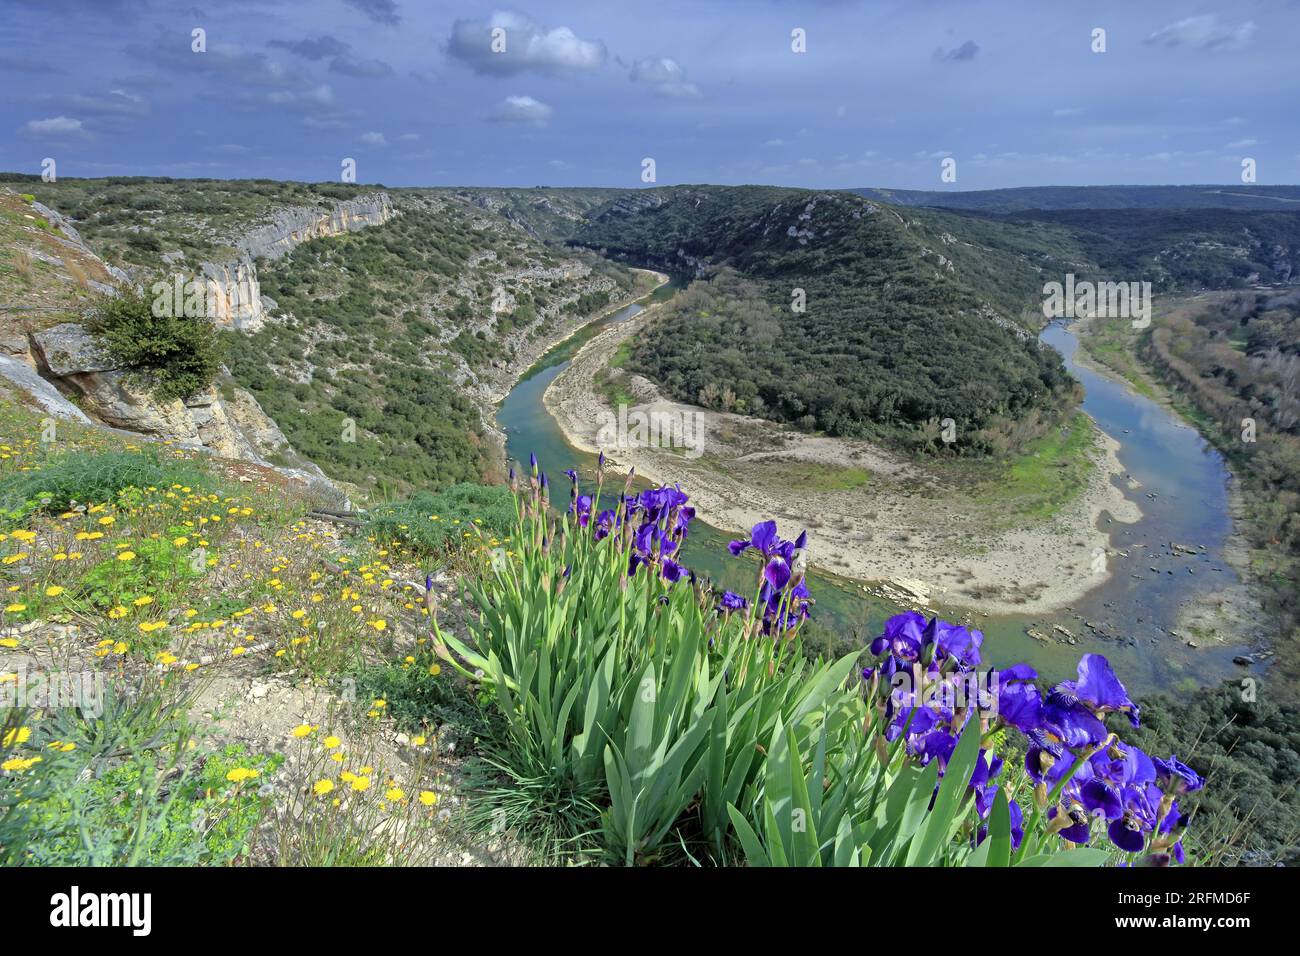 France, Gard department, Sainte-Anastasie, Russan the gorges of the Gardon, the meander since the Castellas, Iris in flower foreground Stock Photo